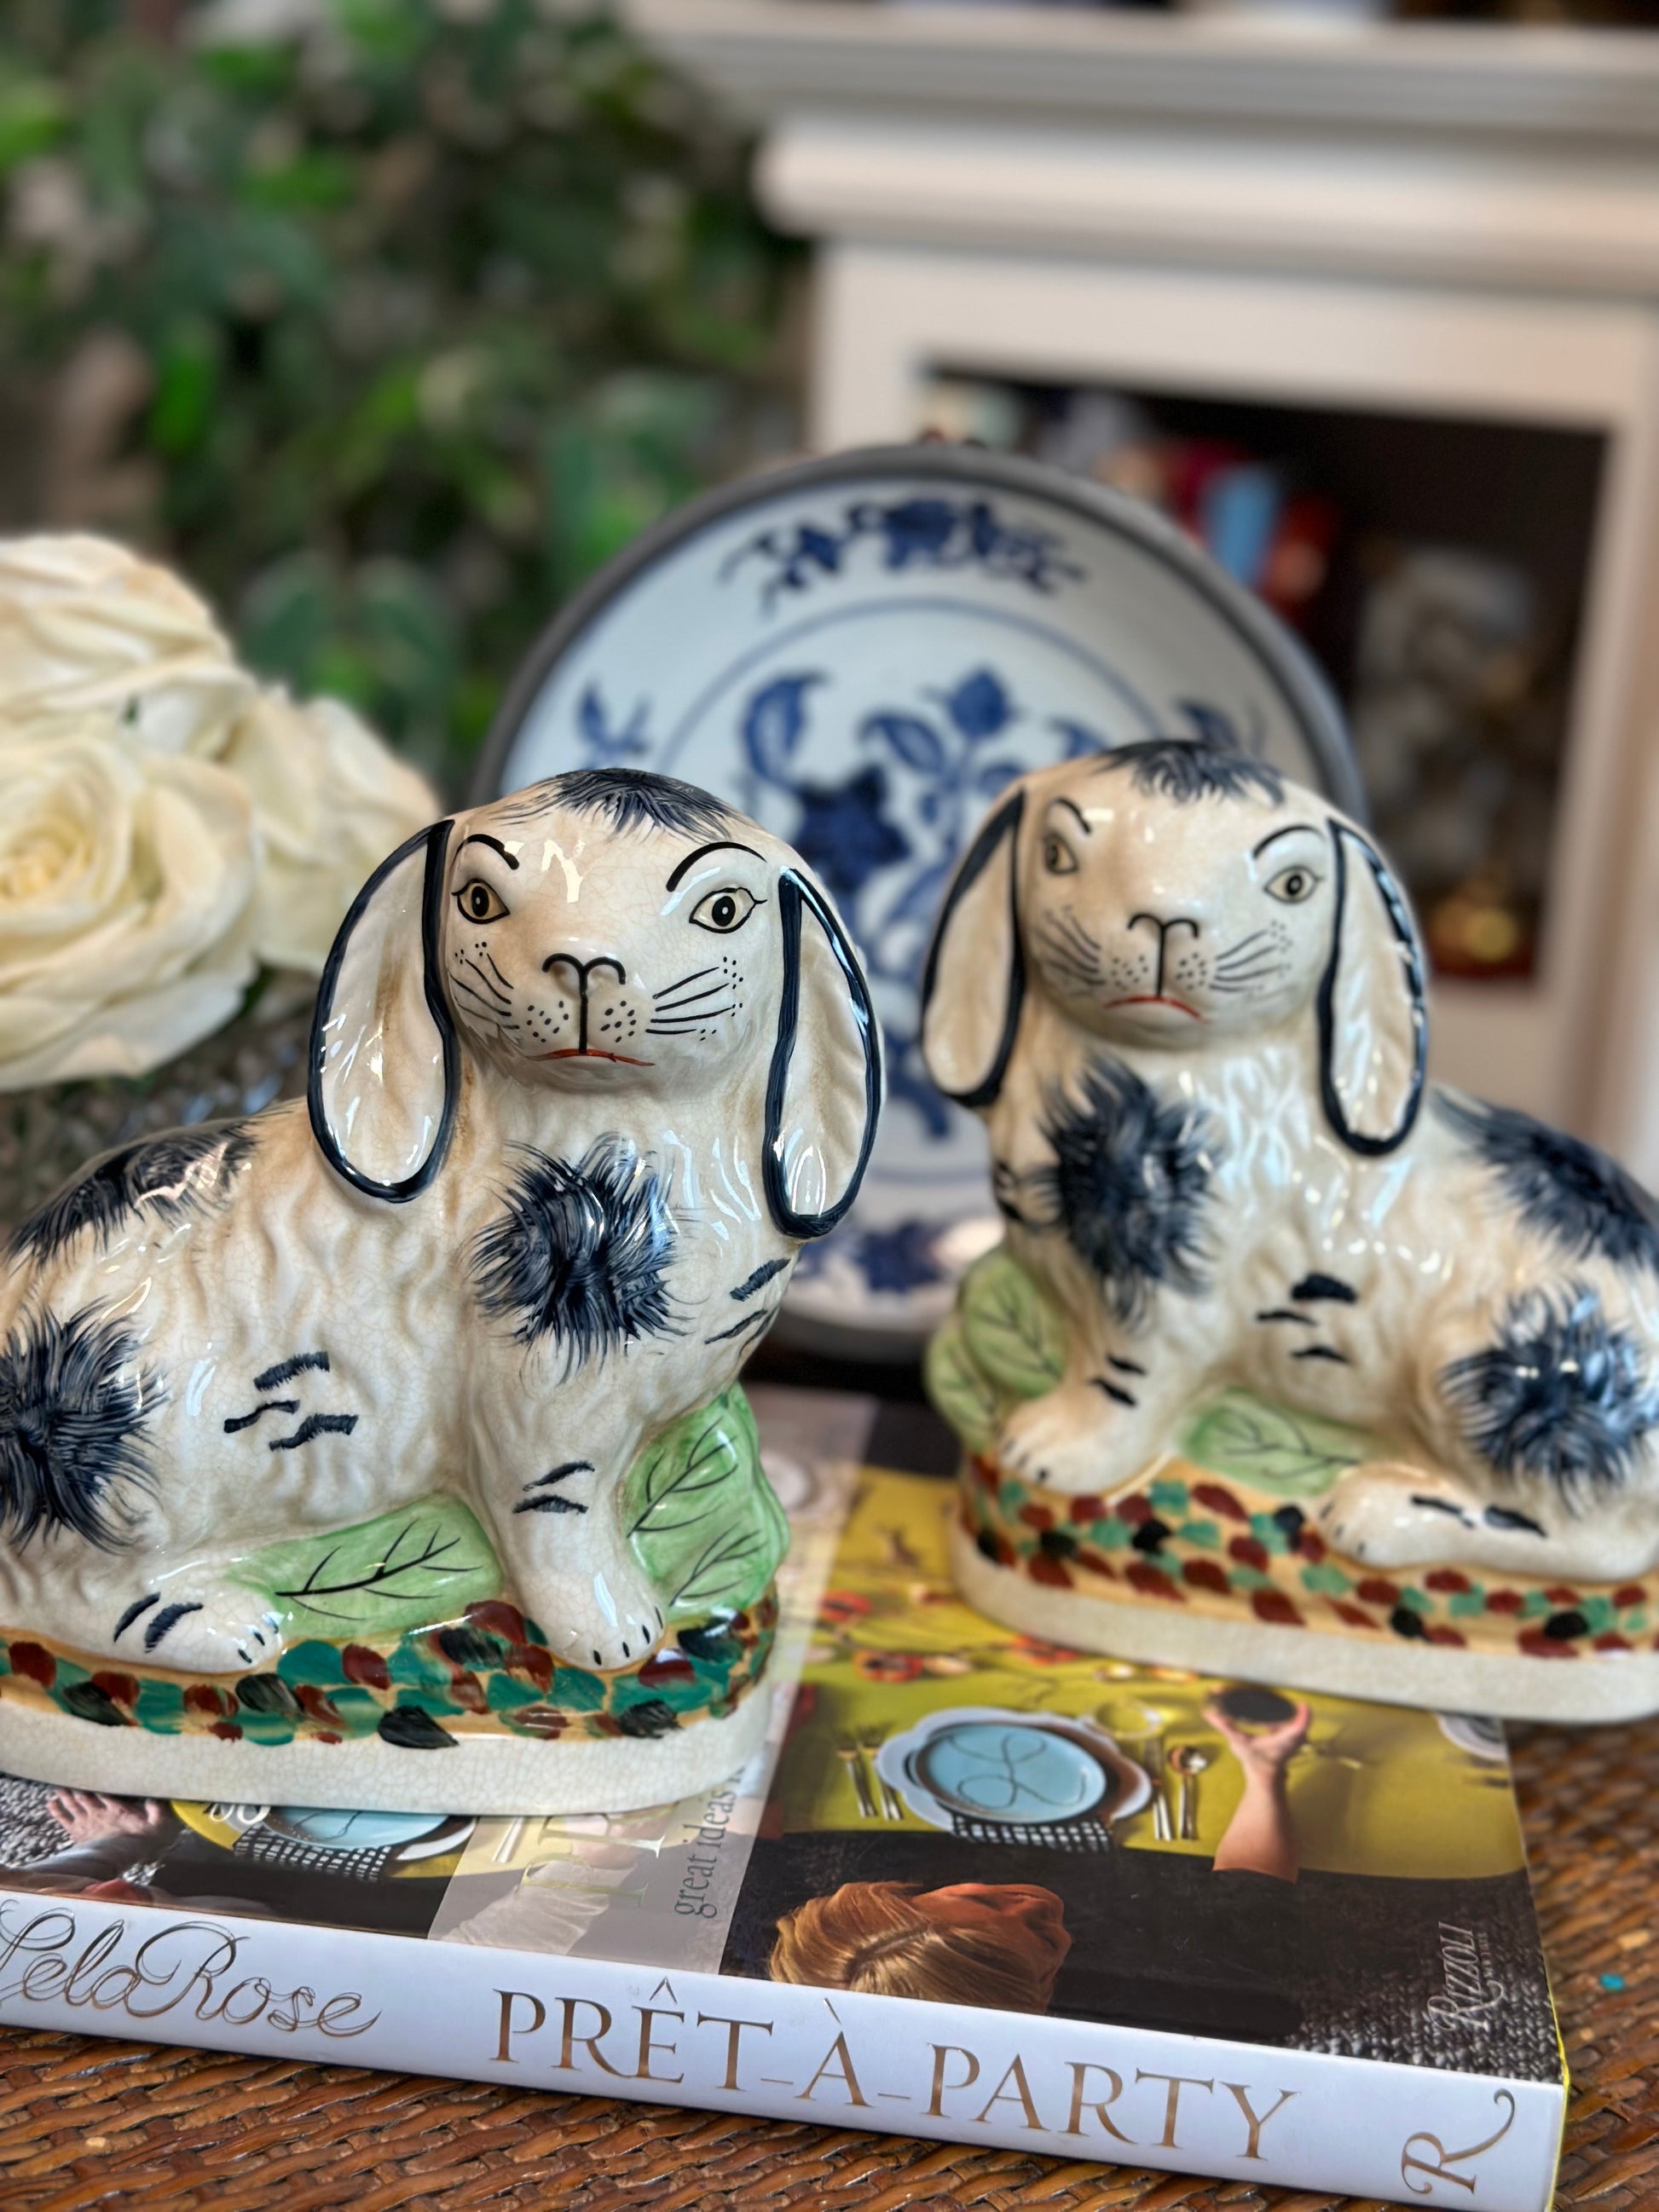 Modern Tall Chinoiserie Ceramic Bunny